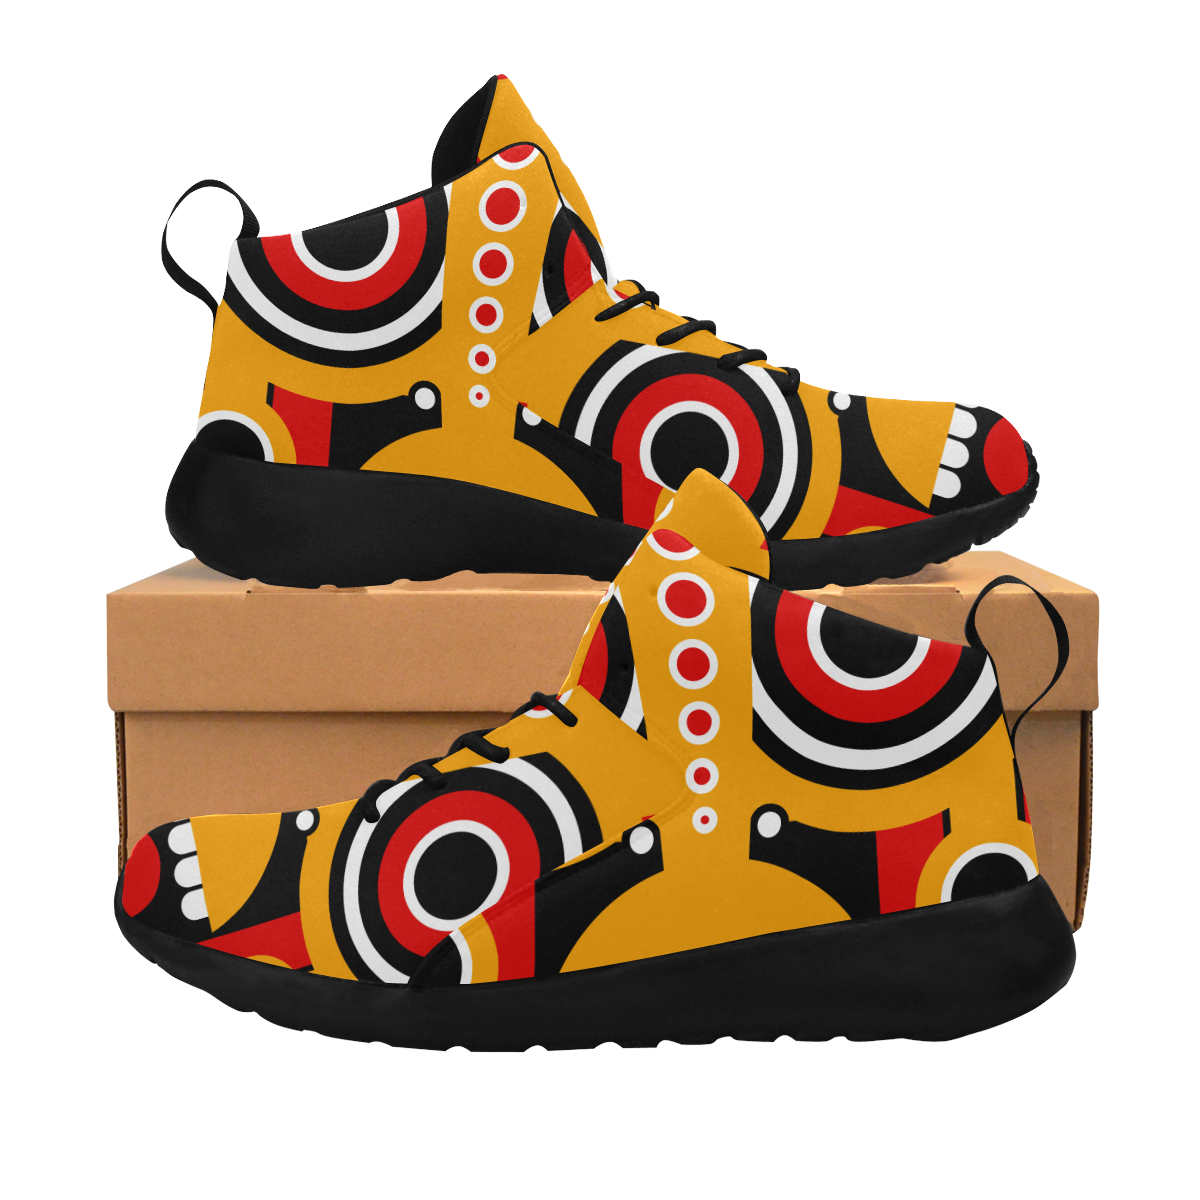 Red Yellow Tiki Tribal Men's Chukka Training Shoes (Model 57502)